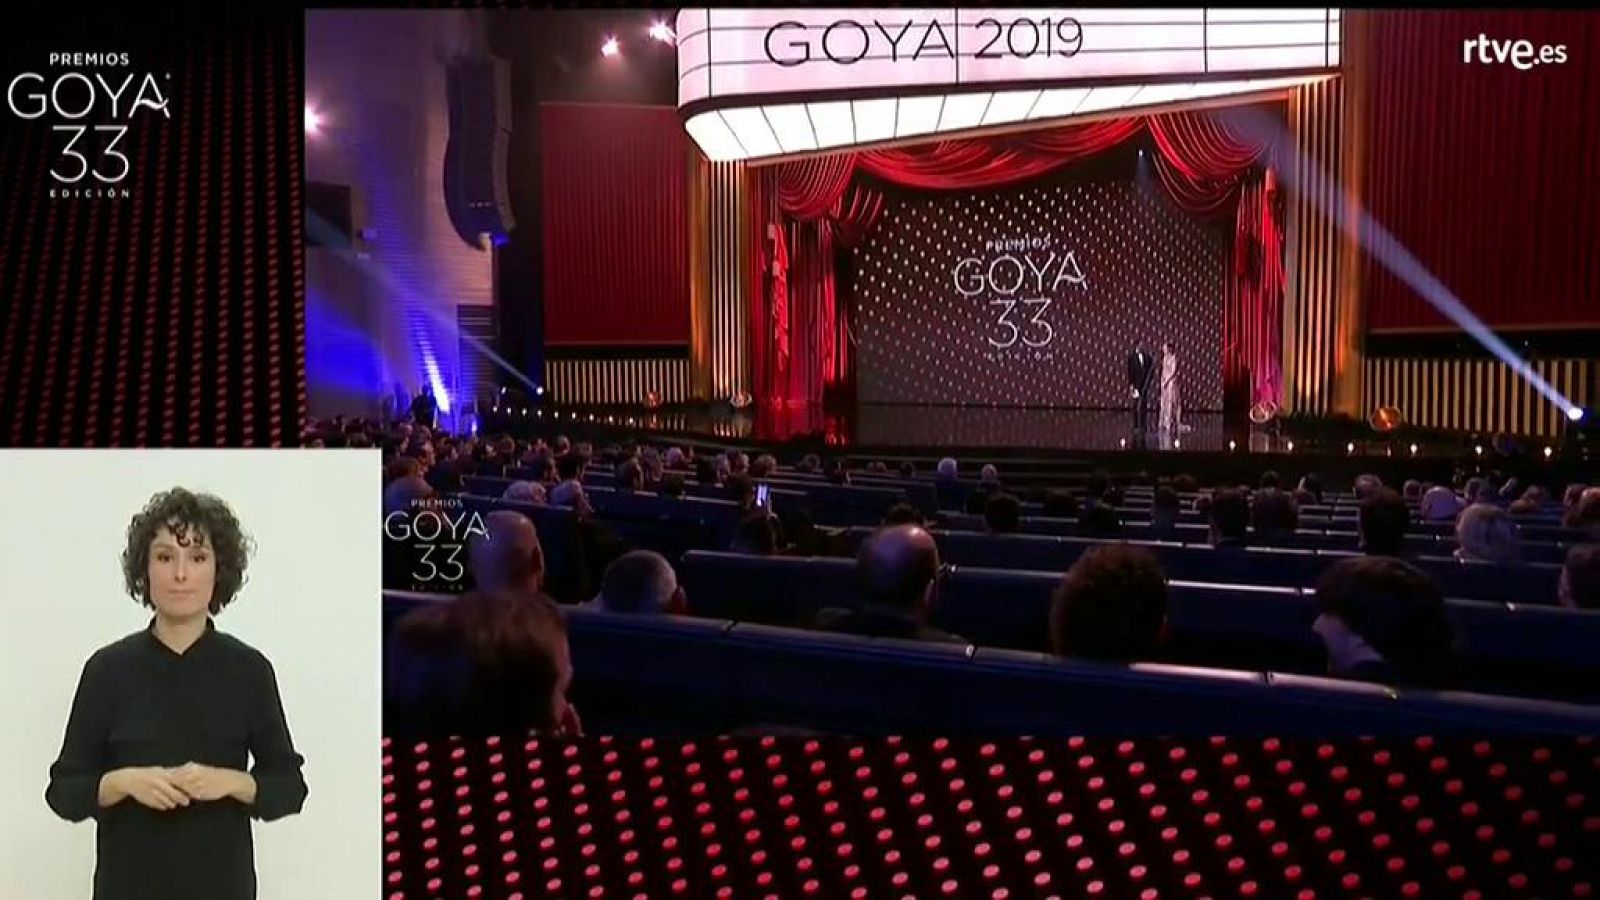 Premios Goya: 33 Edición Premios Goya en lengua de signos (Parte 2 de 2) | RTVE Play